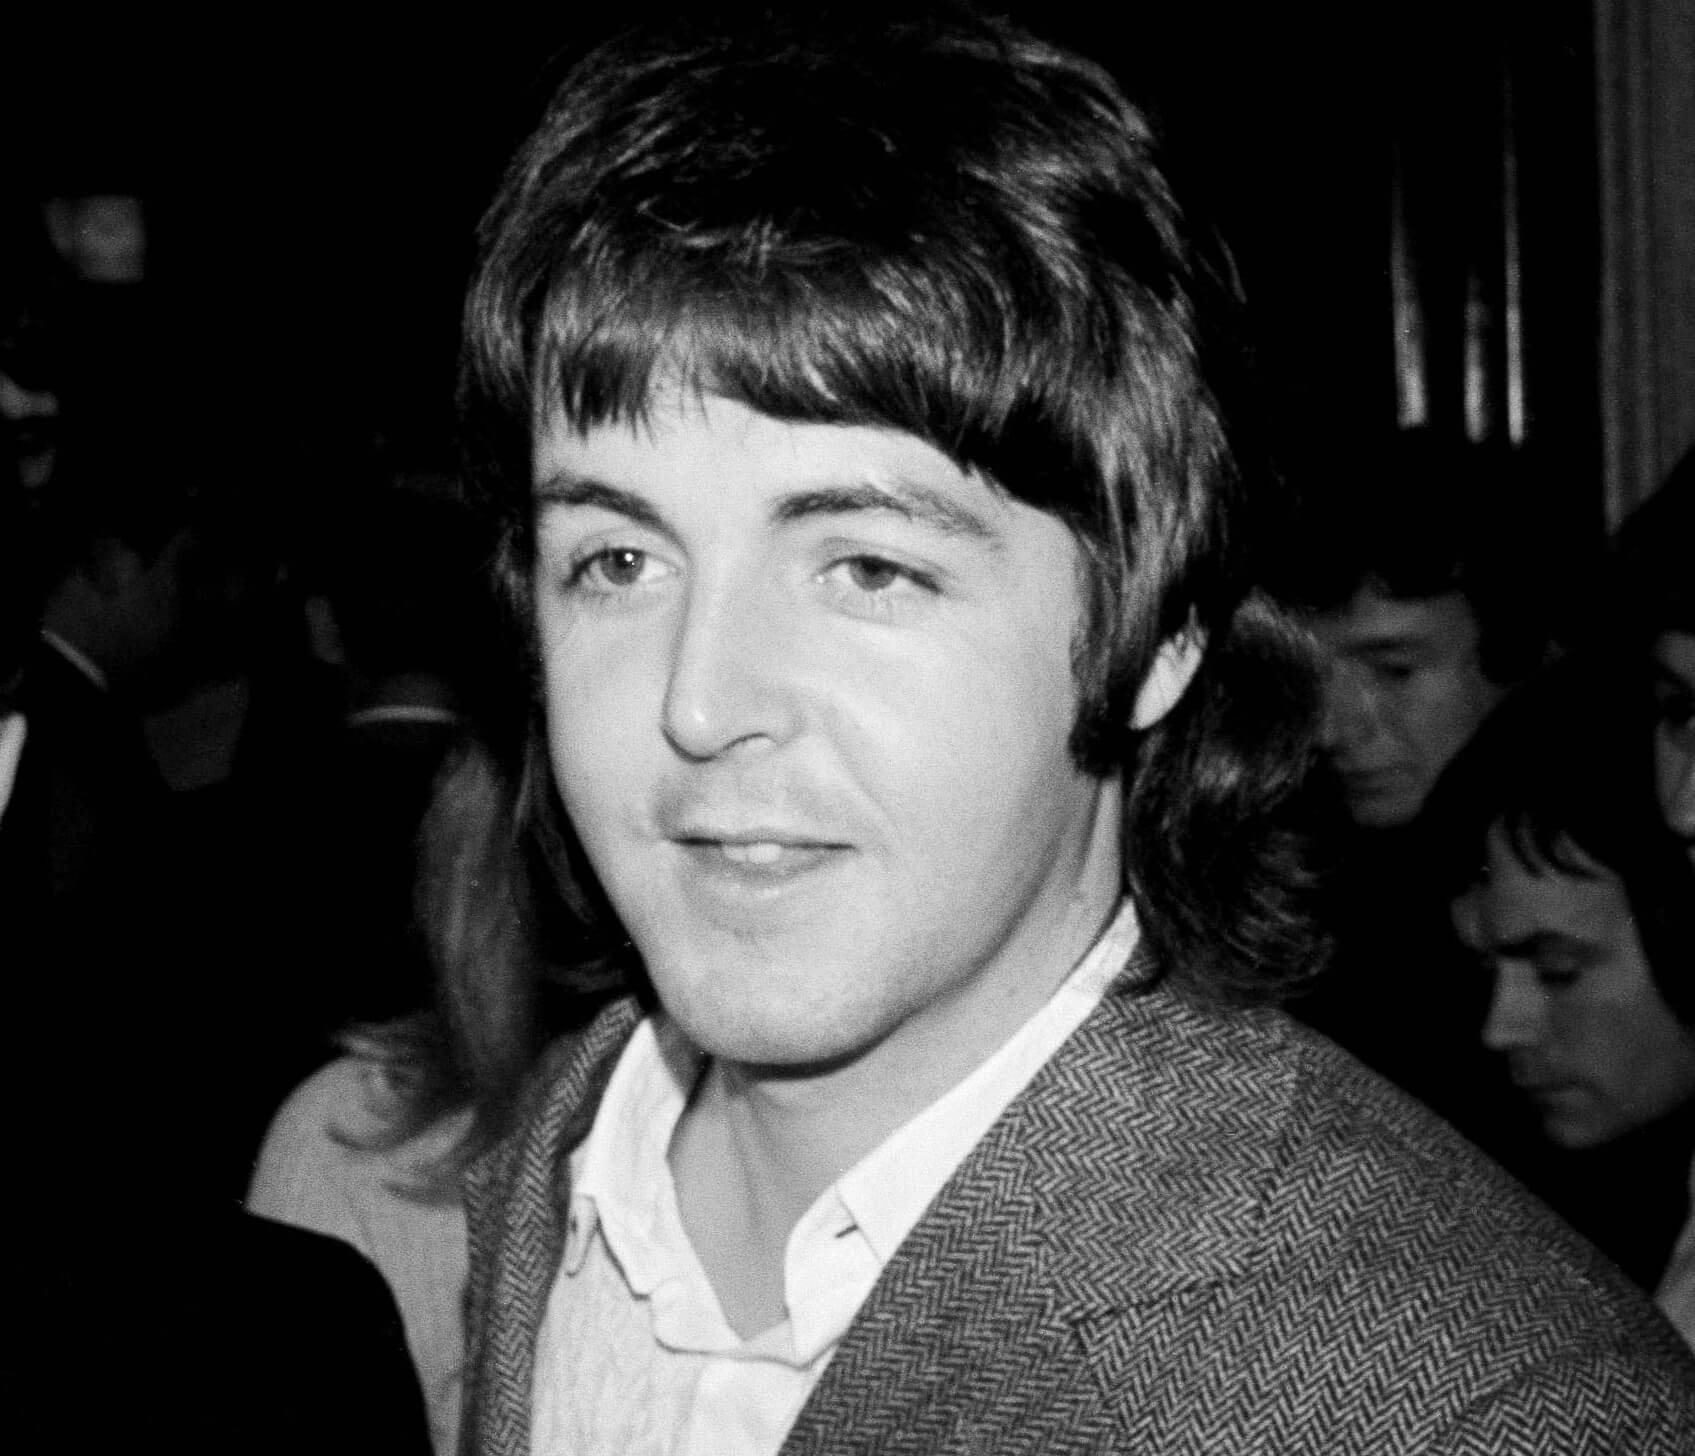 The Beatles' Paul McCartney wearing a collared shirt